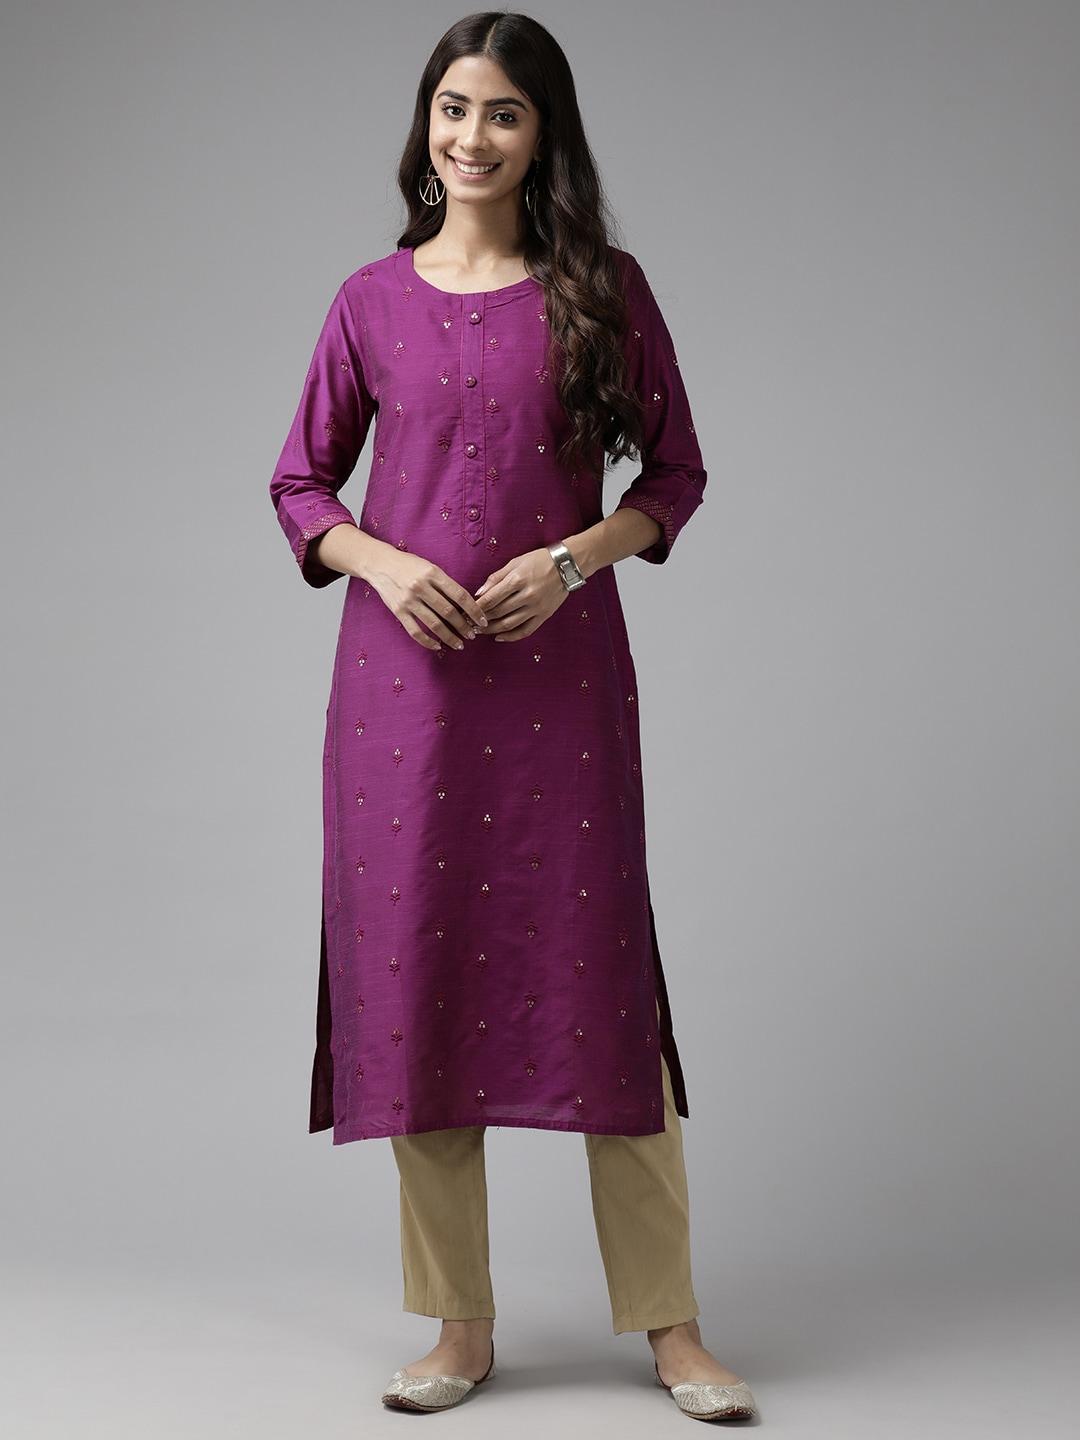 aarika-women-purple-ethnic-motifs-embroidered-sequinned-kurta